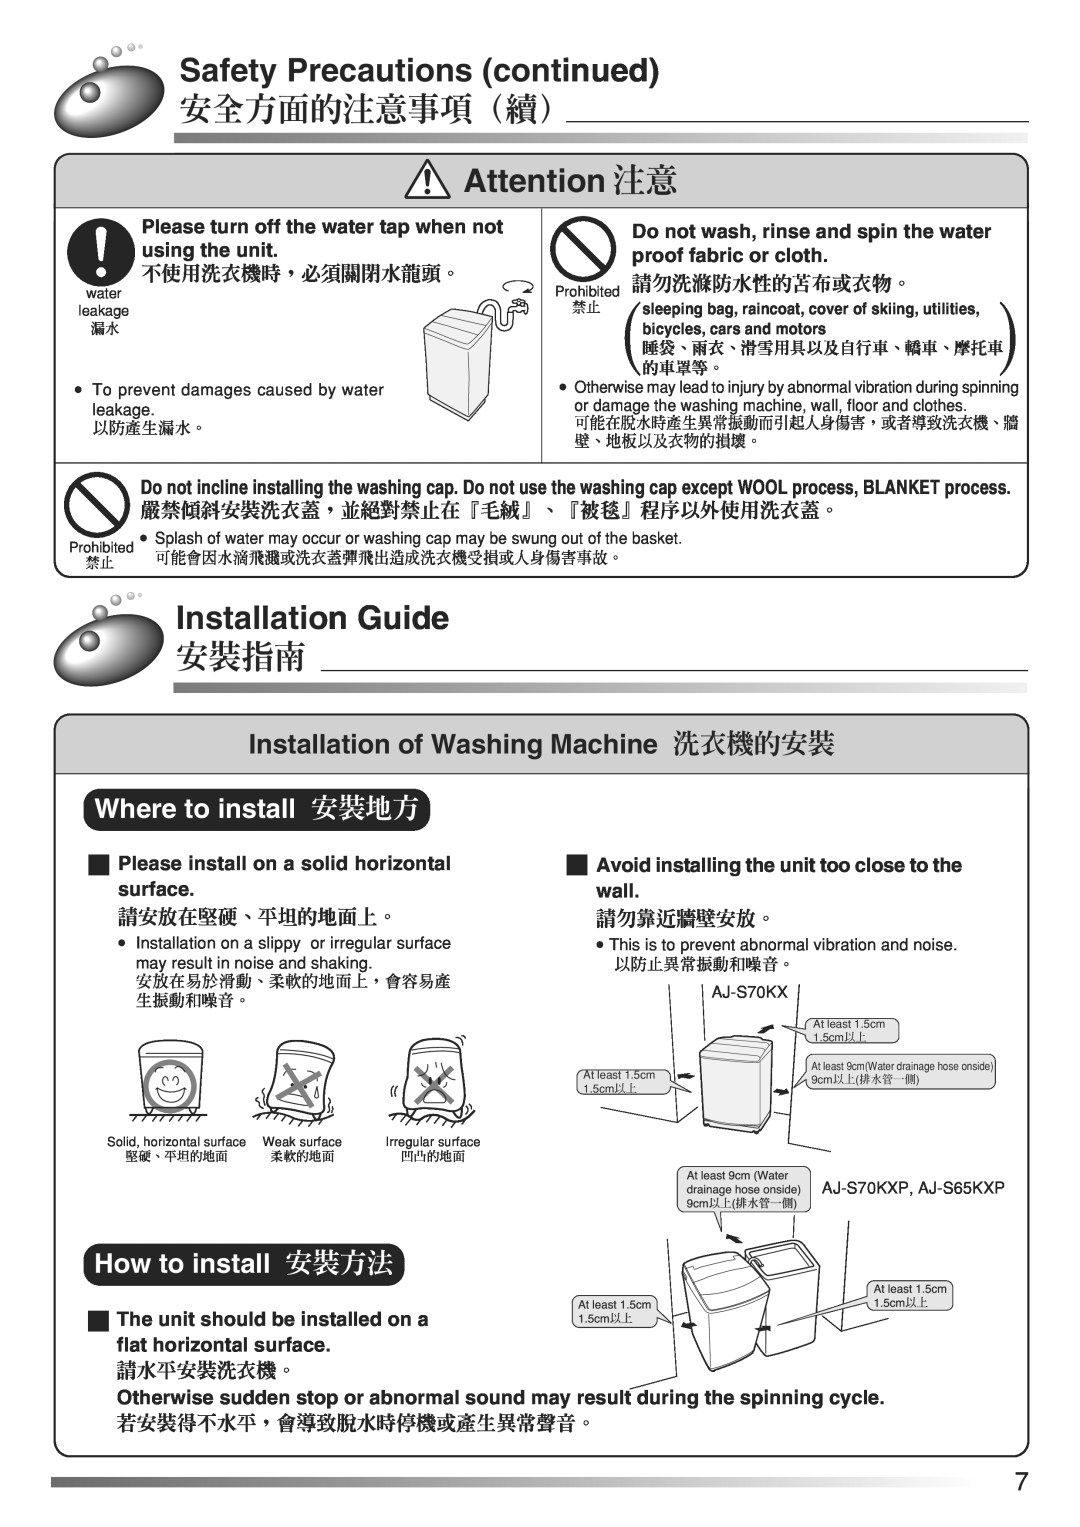 Hitachi AJ-S65KXP Installation Guide, 安裝指南, Installation of Washing Machine 洗衣機的安裝, Safety Precautions continued, 以防產生漏水。 